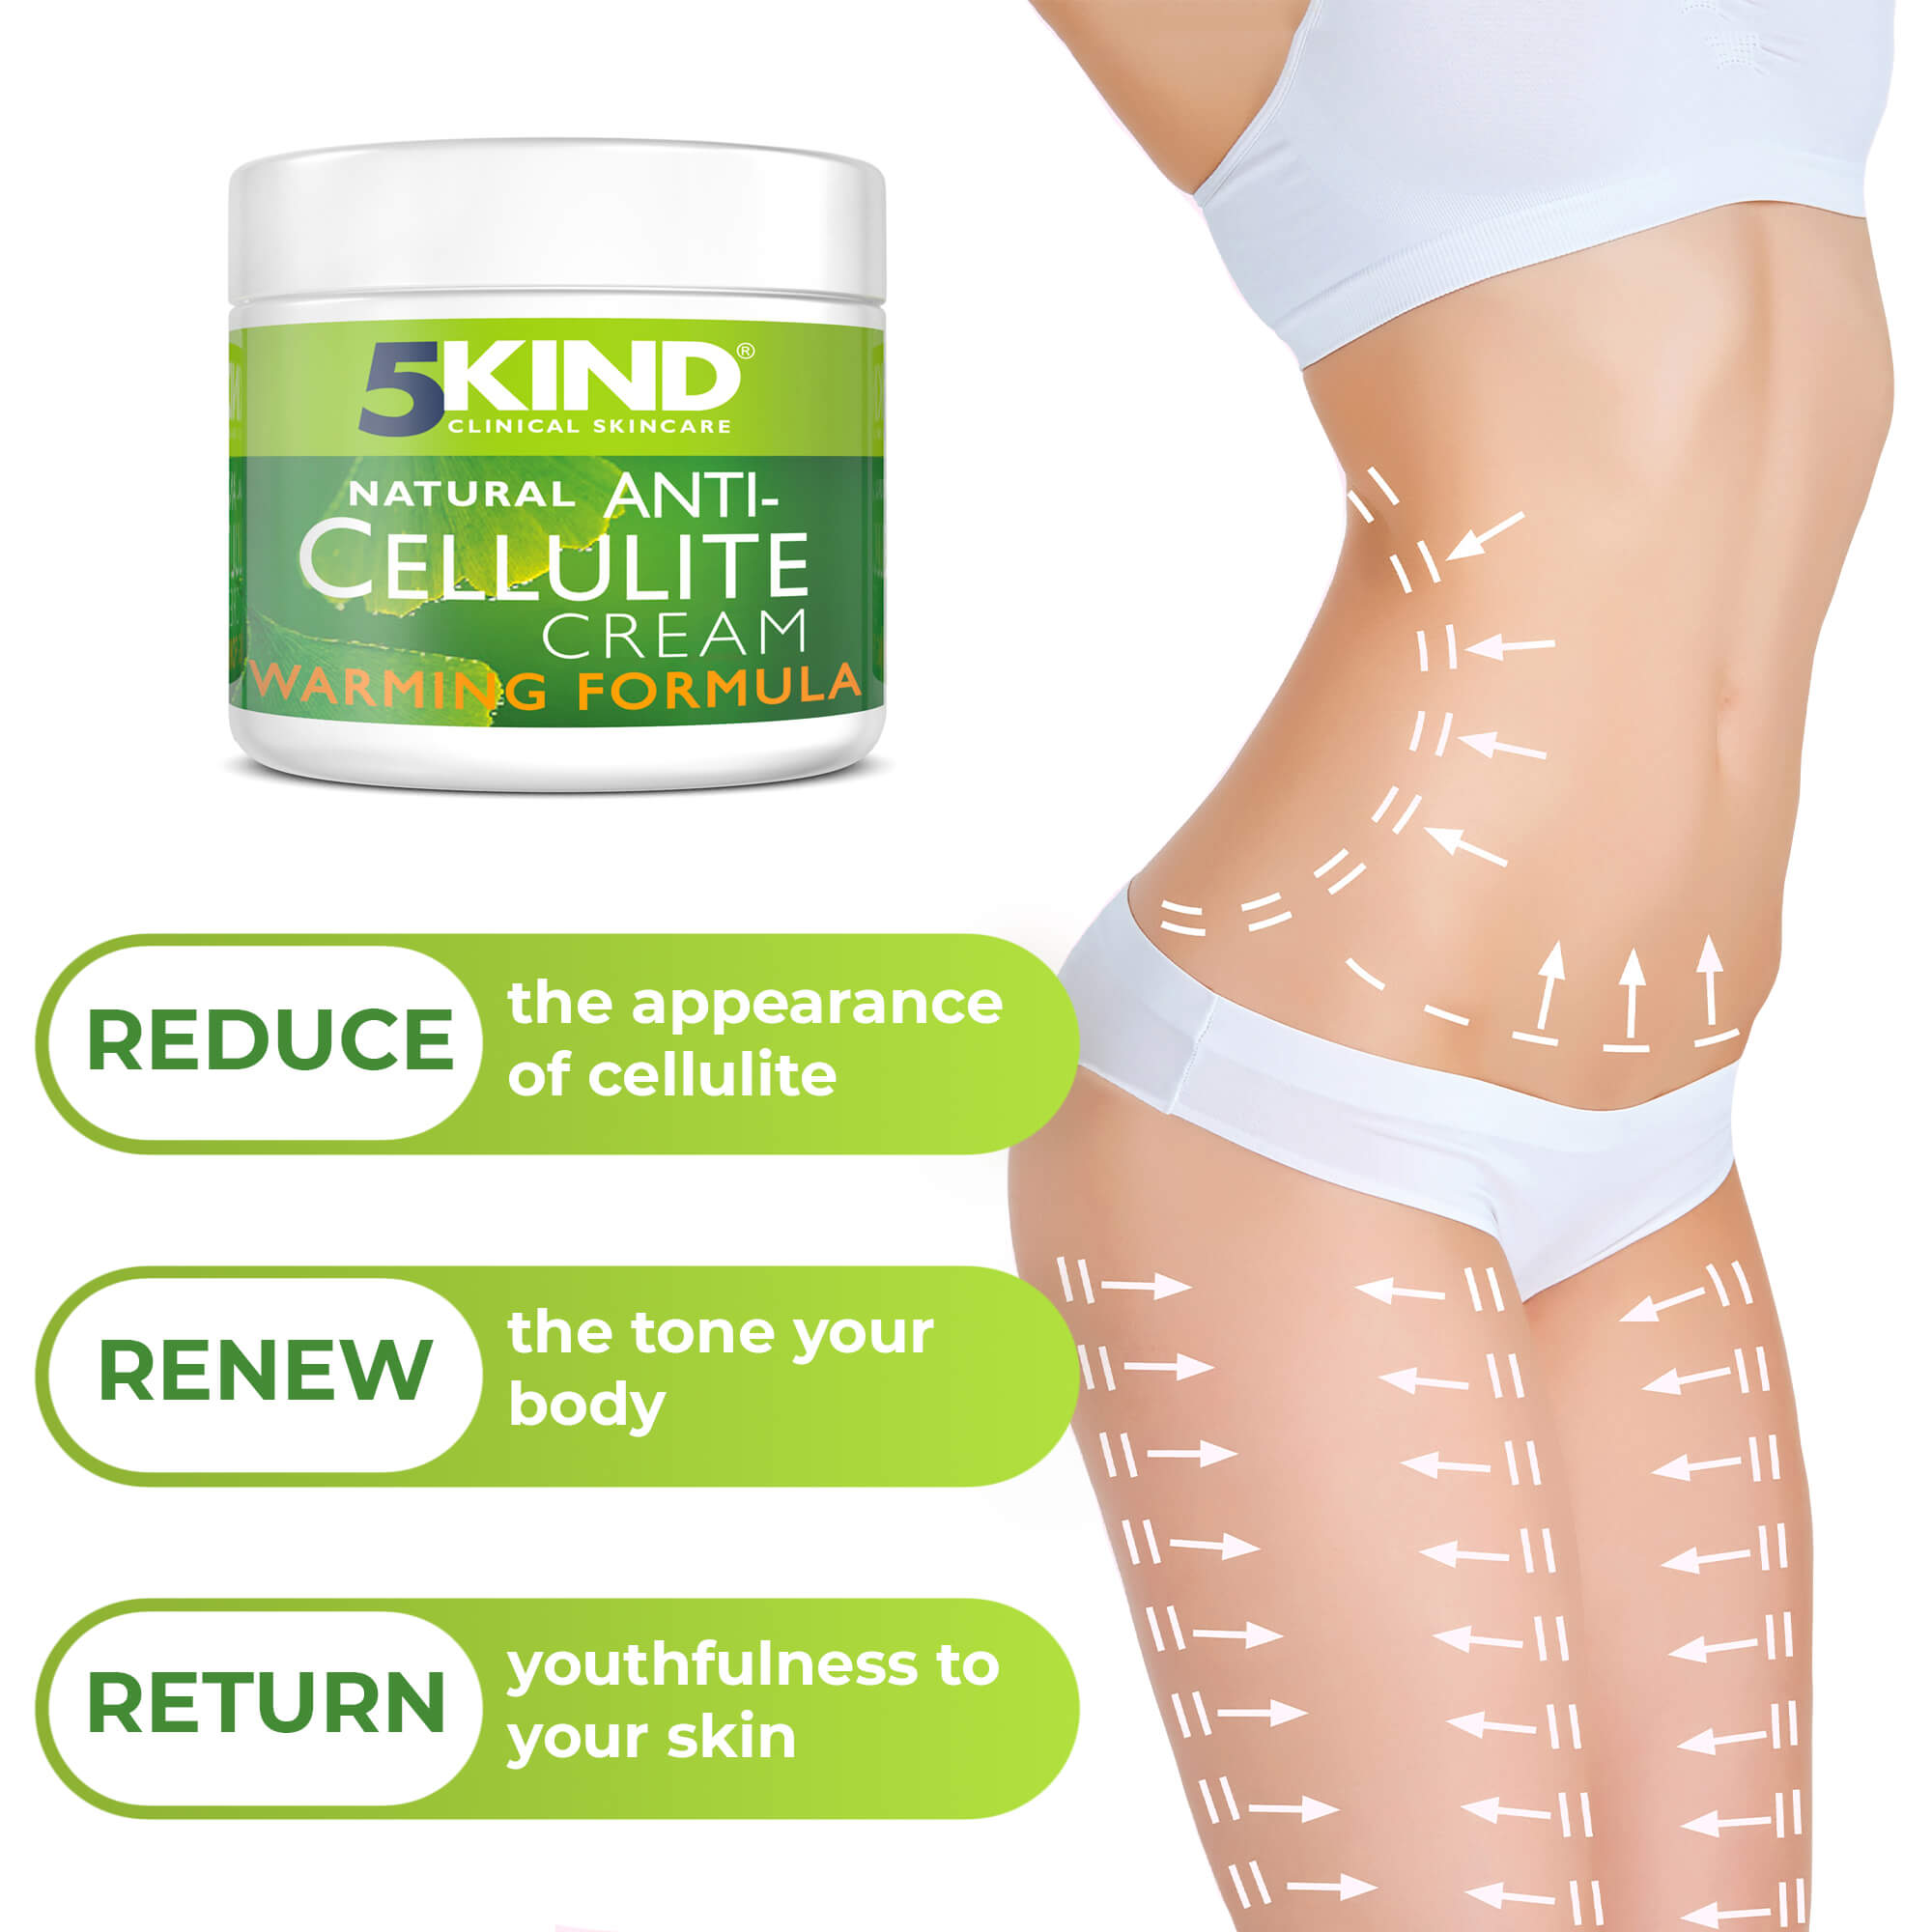 5Kind Natural Cellulite Cream – 5kind - Clinical Skincare